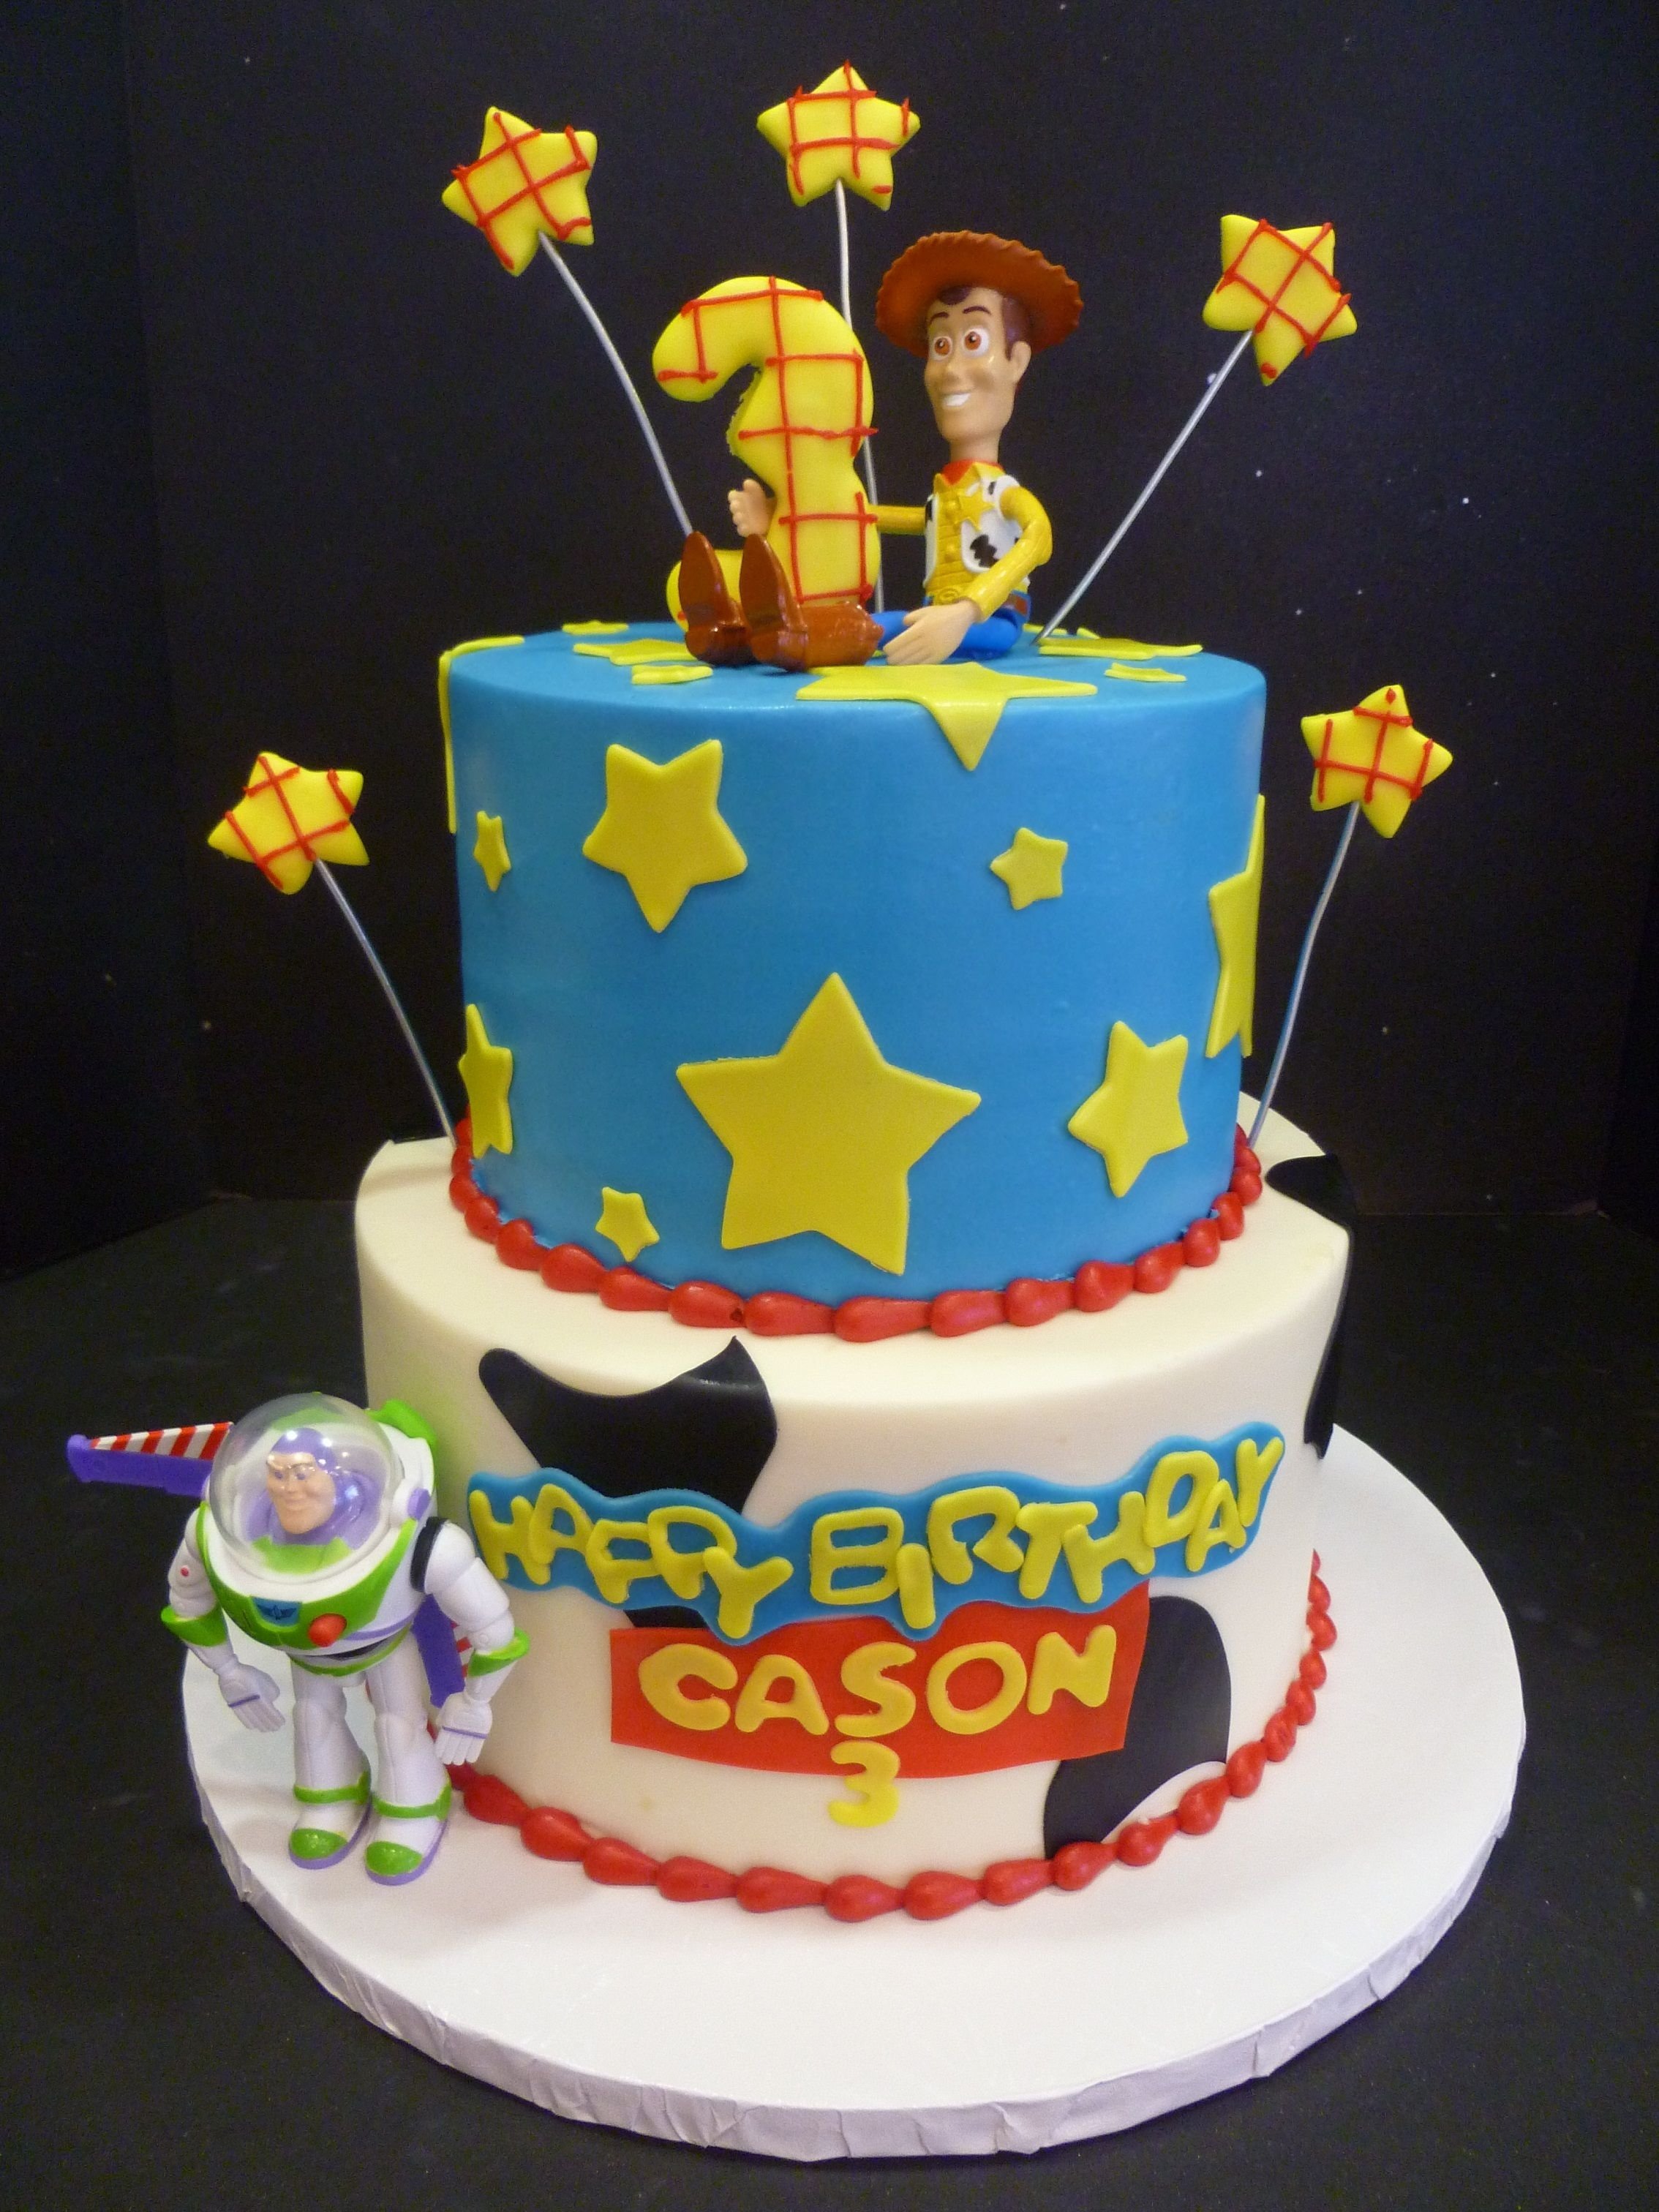 10 Spectacular Toy Story Birthday Cake Ideas toy story cakes toy story themed cake outta the oven home etc 2023